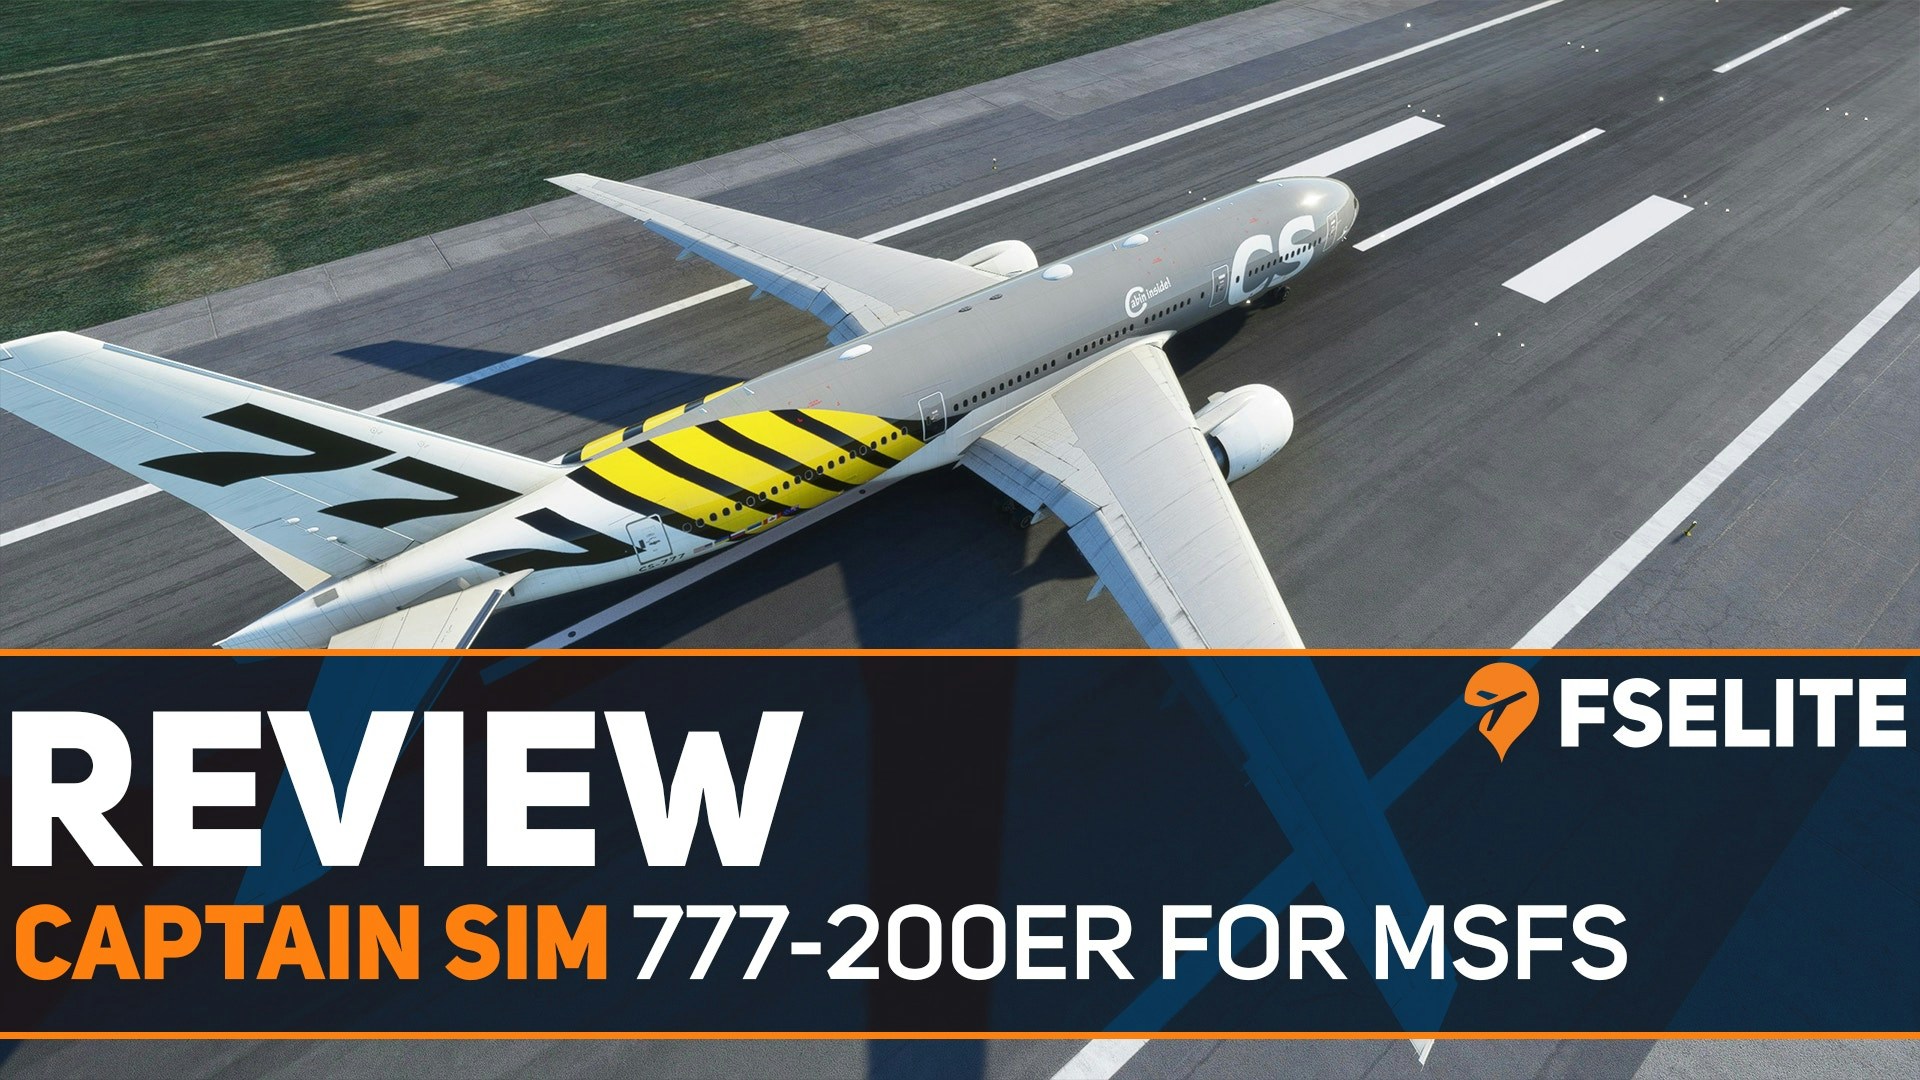 Microsoft Flight Simulator Xbox review: The true graphical